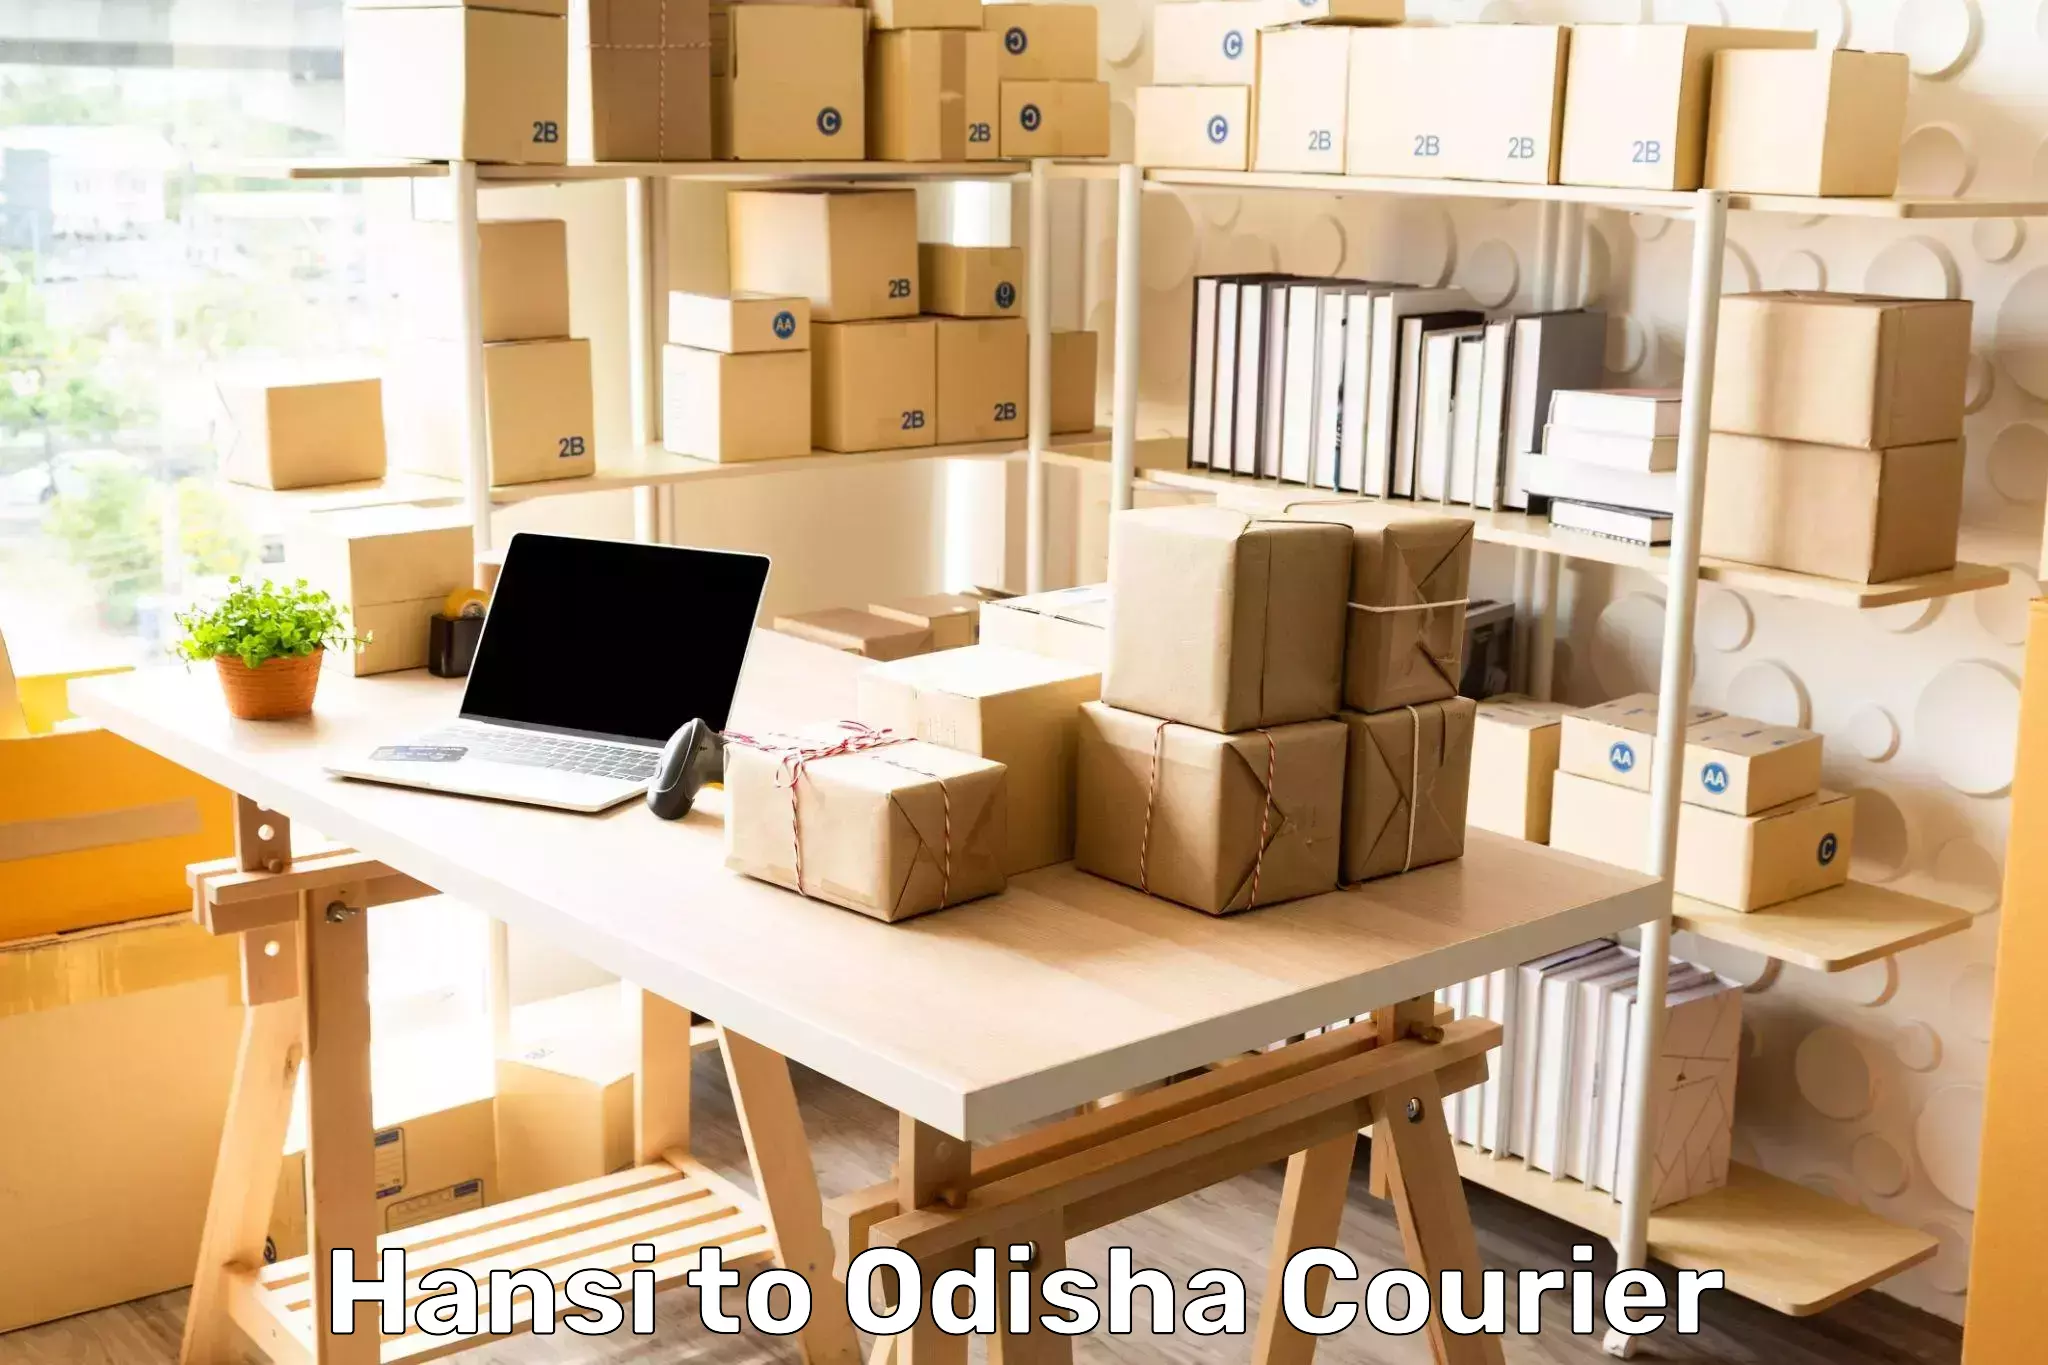 Sustainable shipping practices Hansi to Odisha